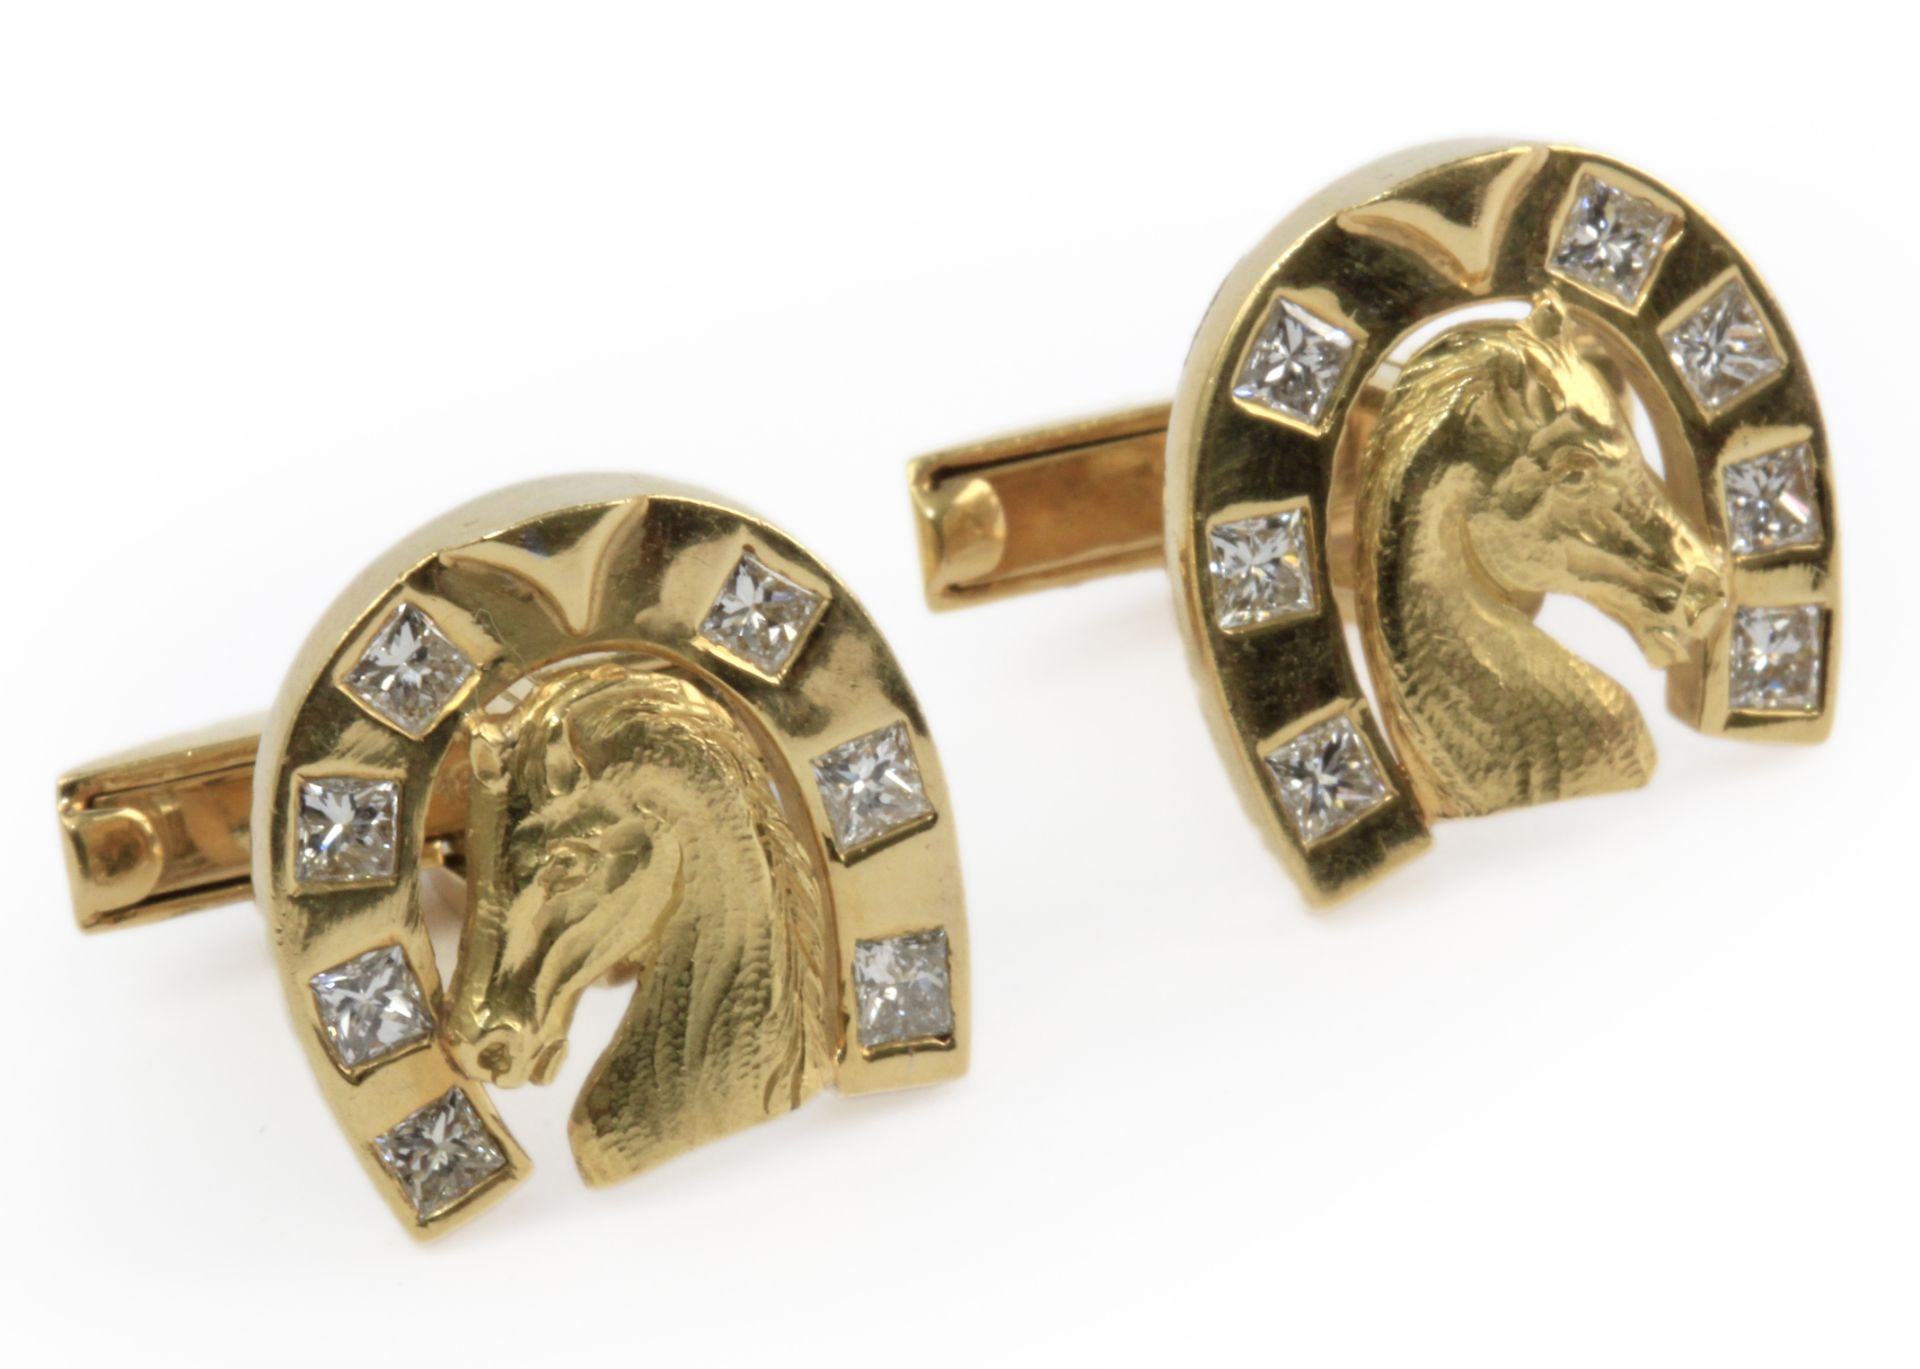 A pair of horseshoe cufflinks. 18 k. yellow gold setting and princess cut diamonds